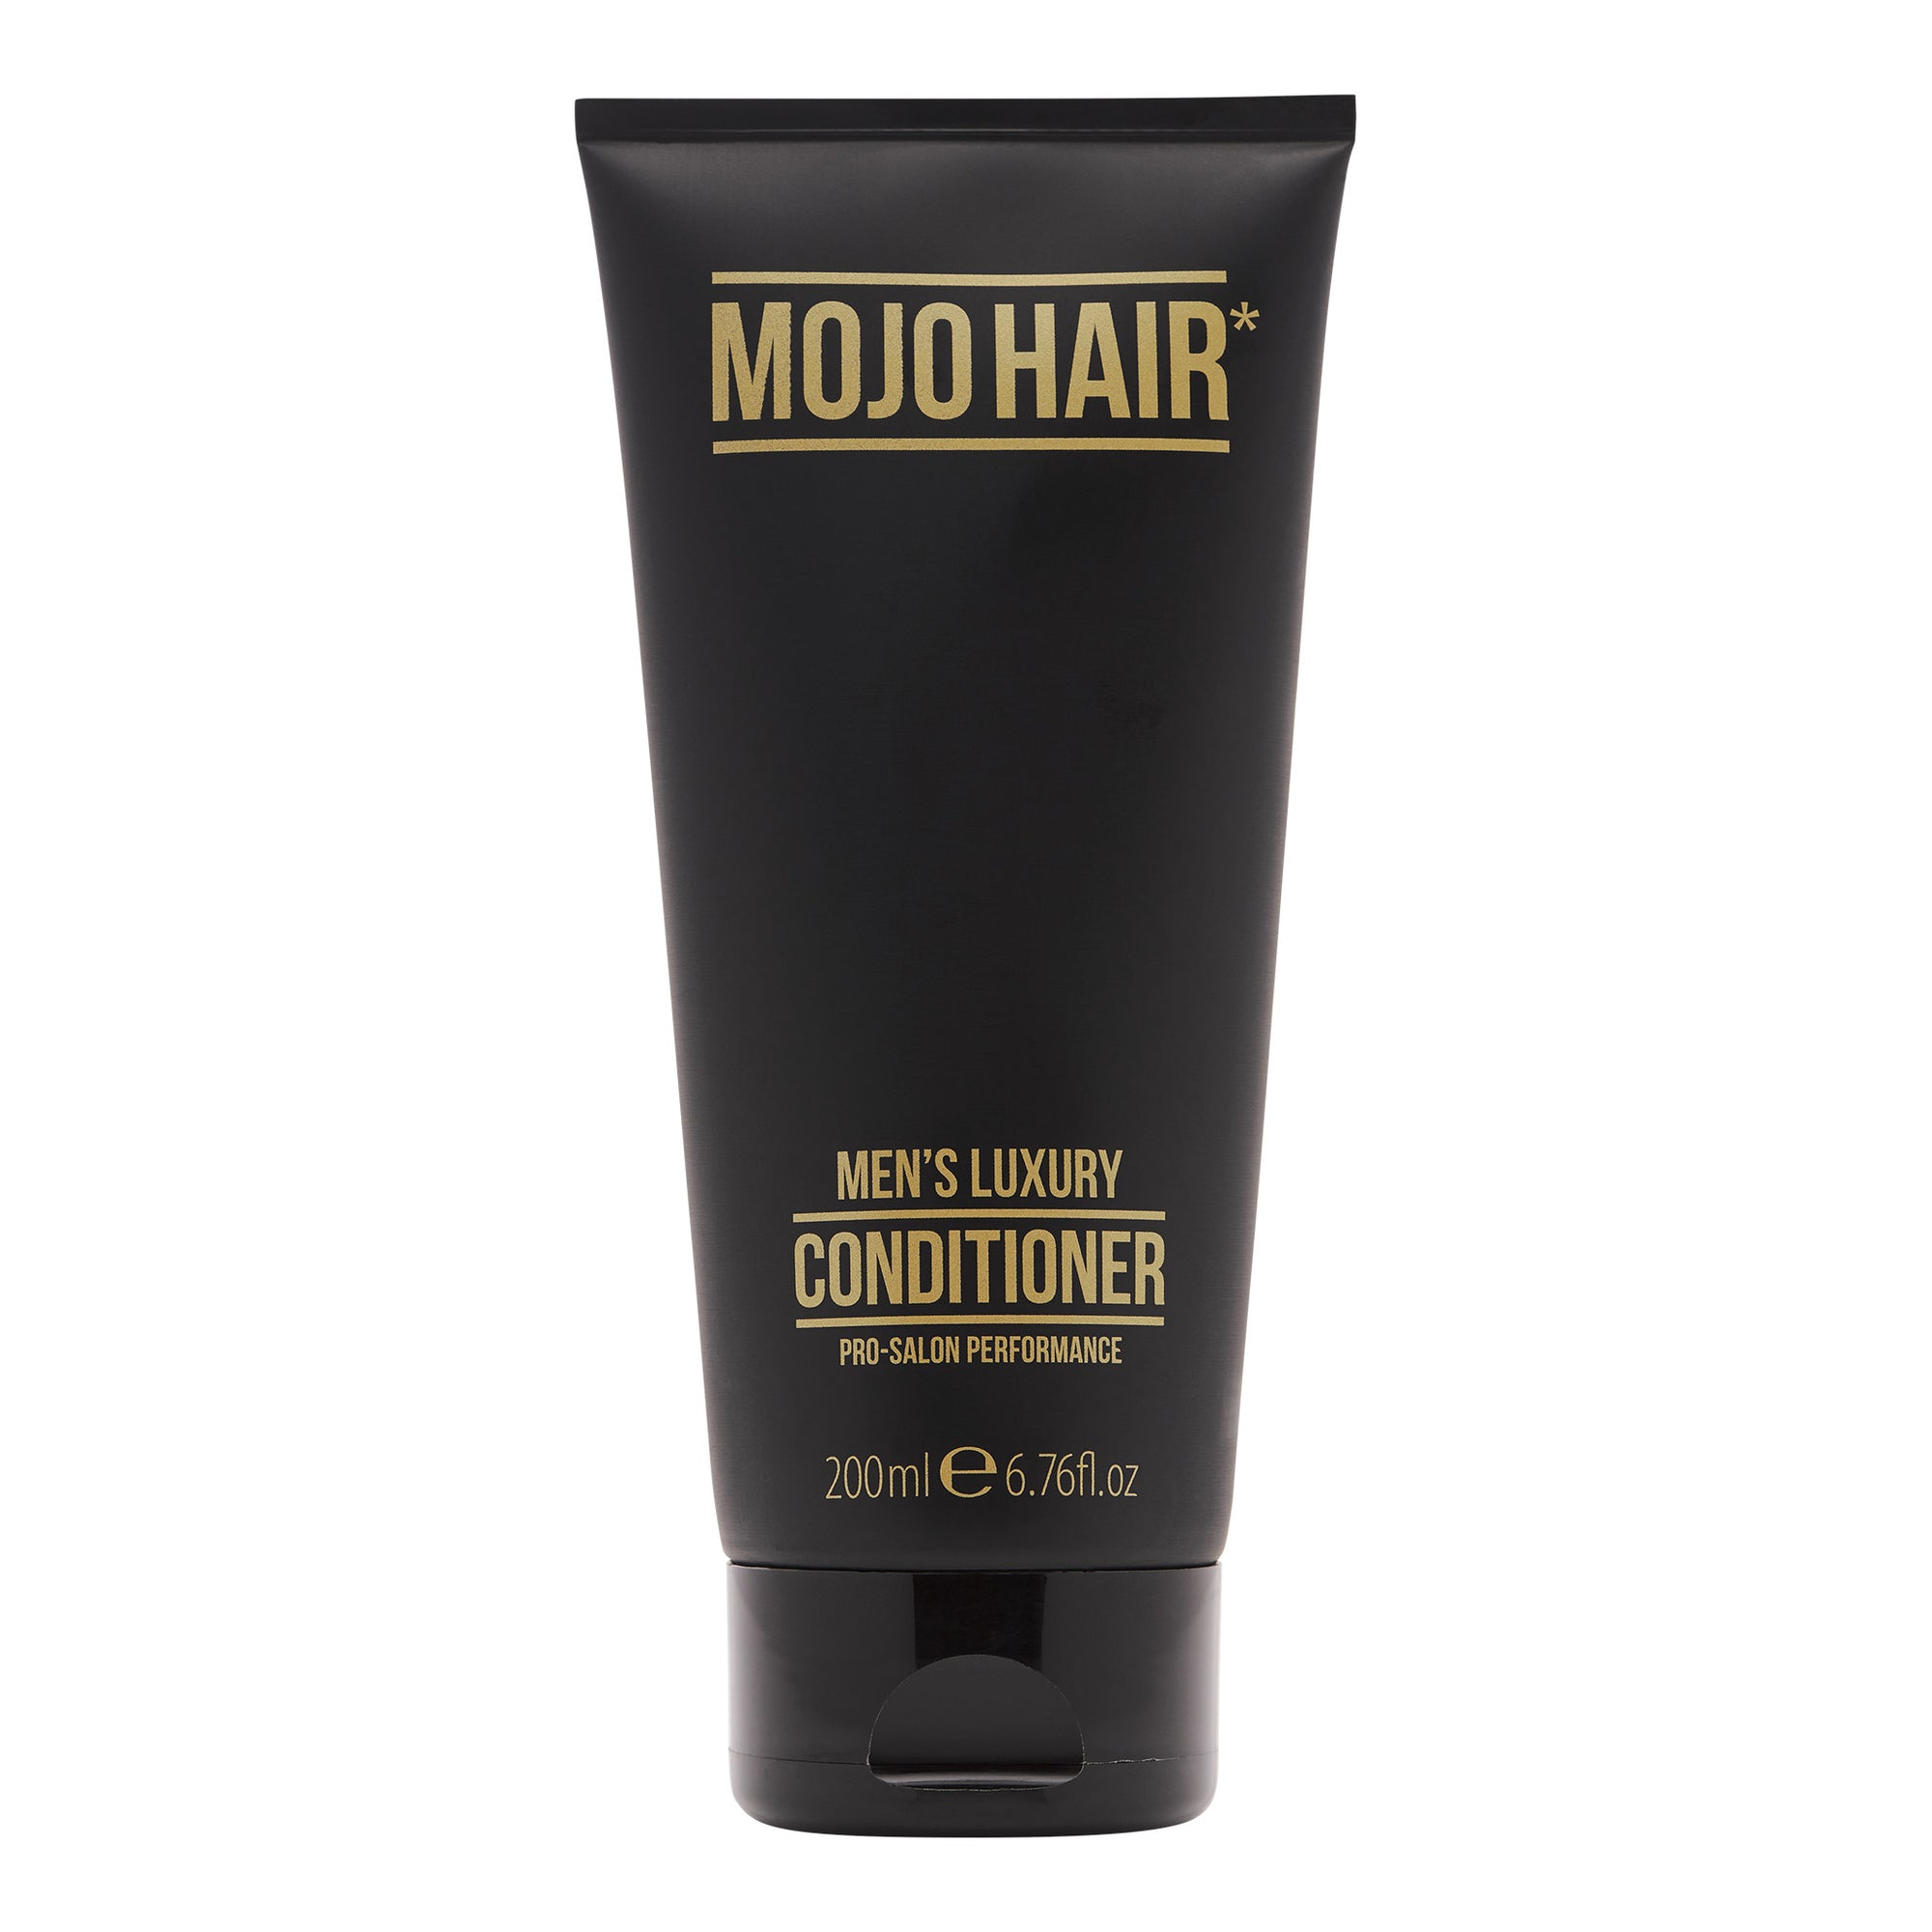 Mojo Hair Men’s Luxury Conditioner (200ml / 6.76fl.oz)